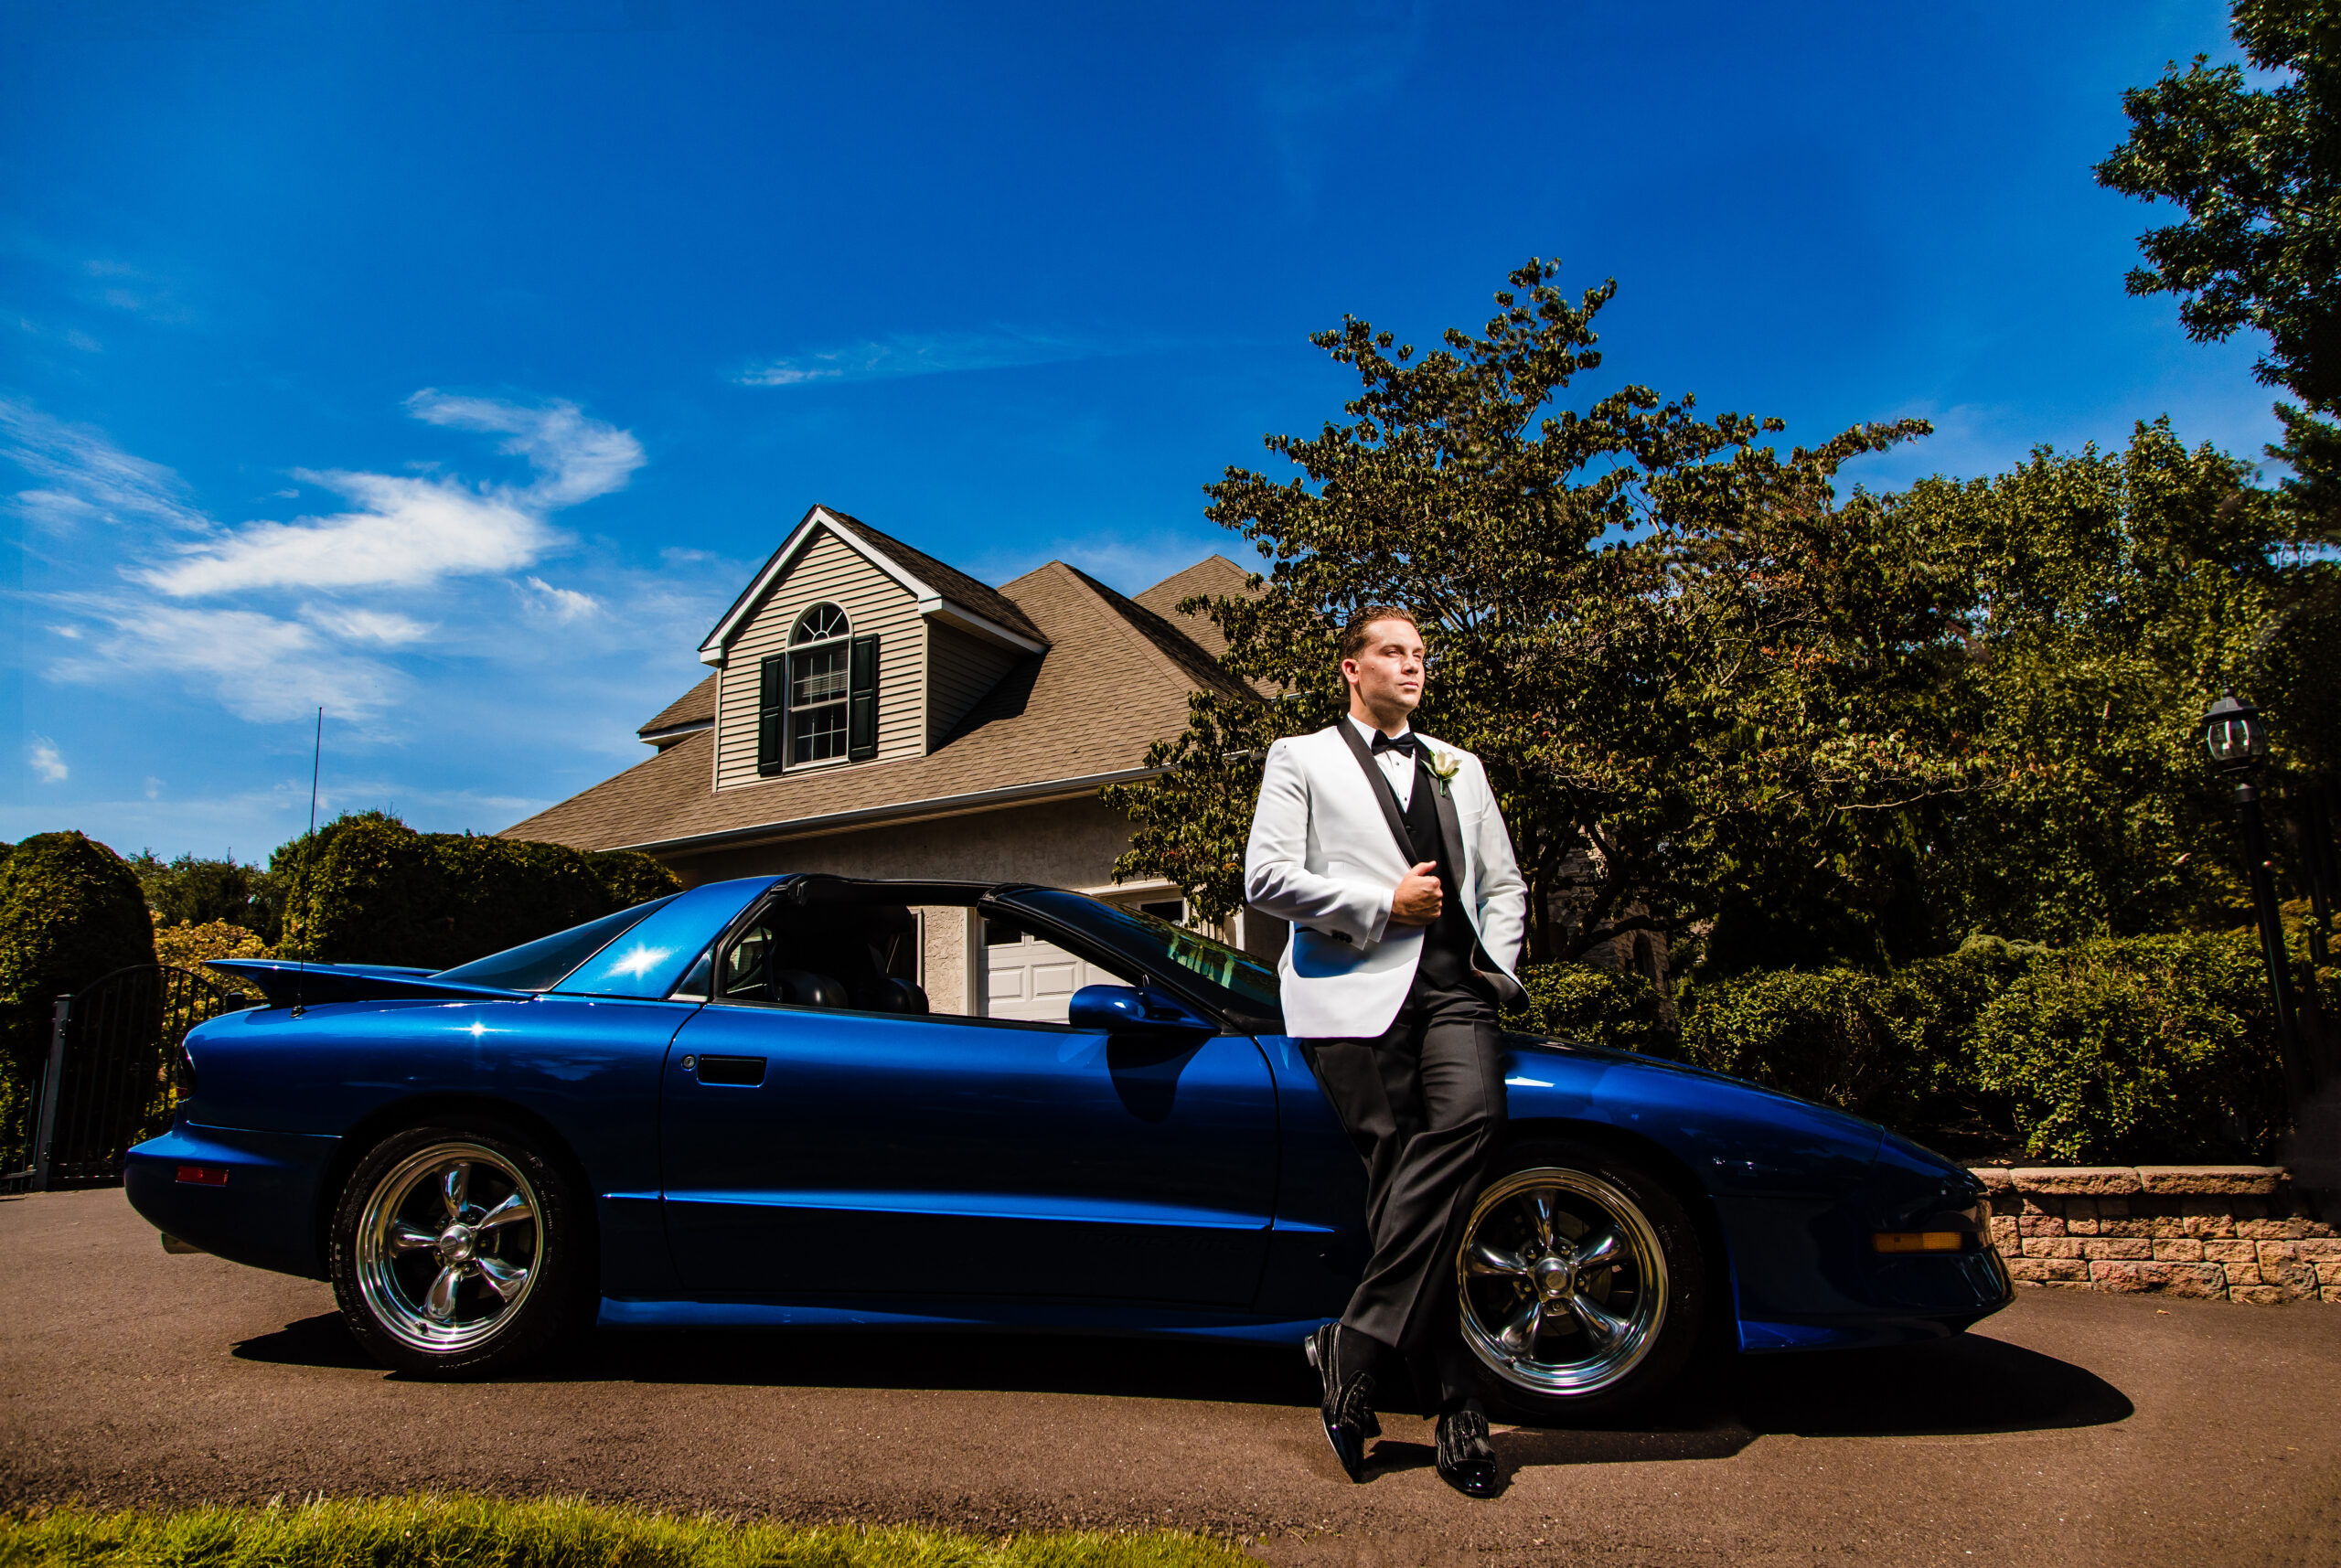 A man in a tuxedo captured by New Jersey Wedding Photographer Jarot Bocanegra next to a blue sports car.